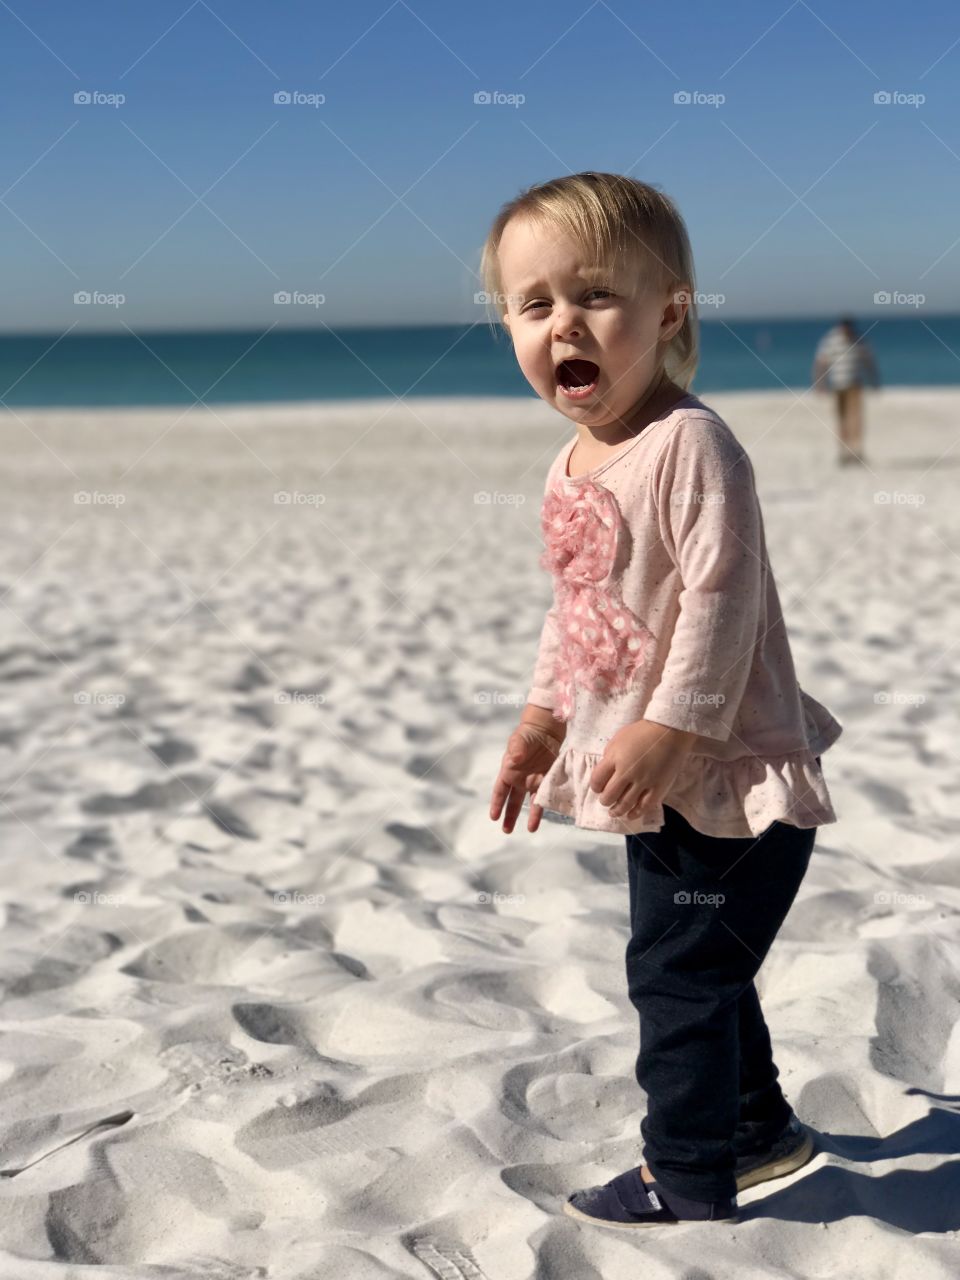 Child, Beach, Sand, Sea, Water